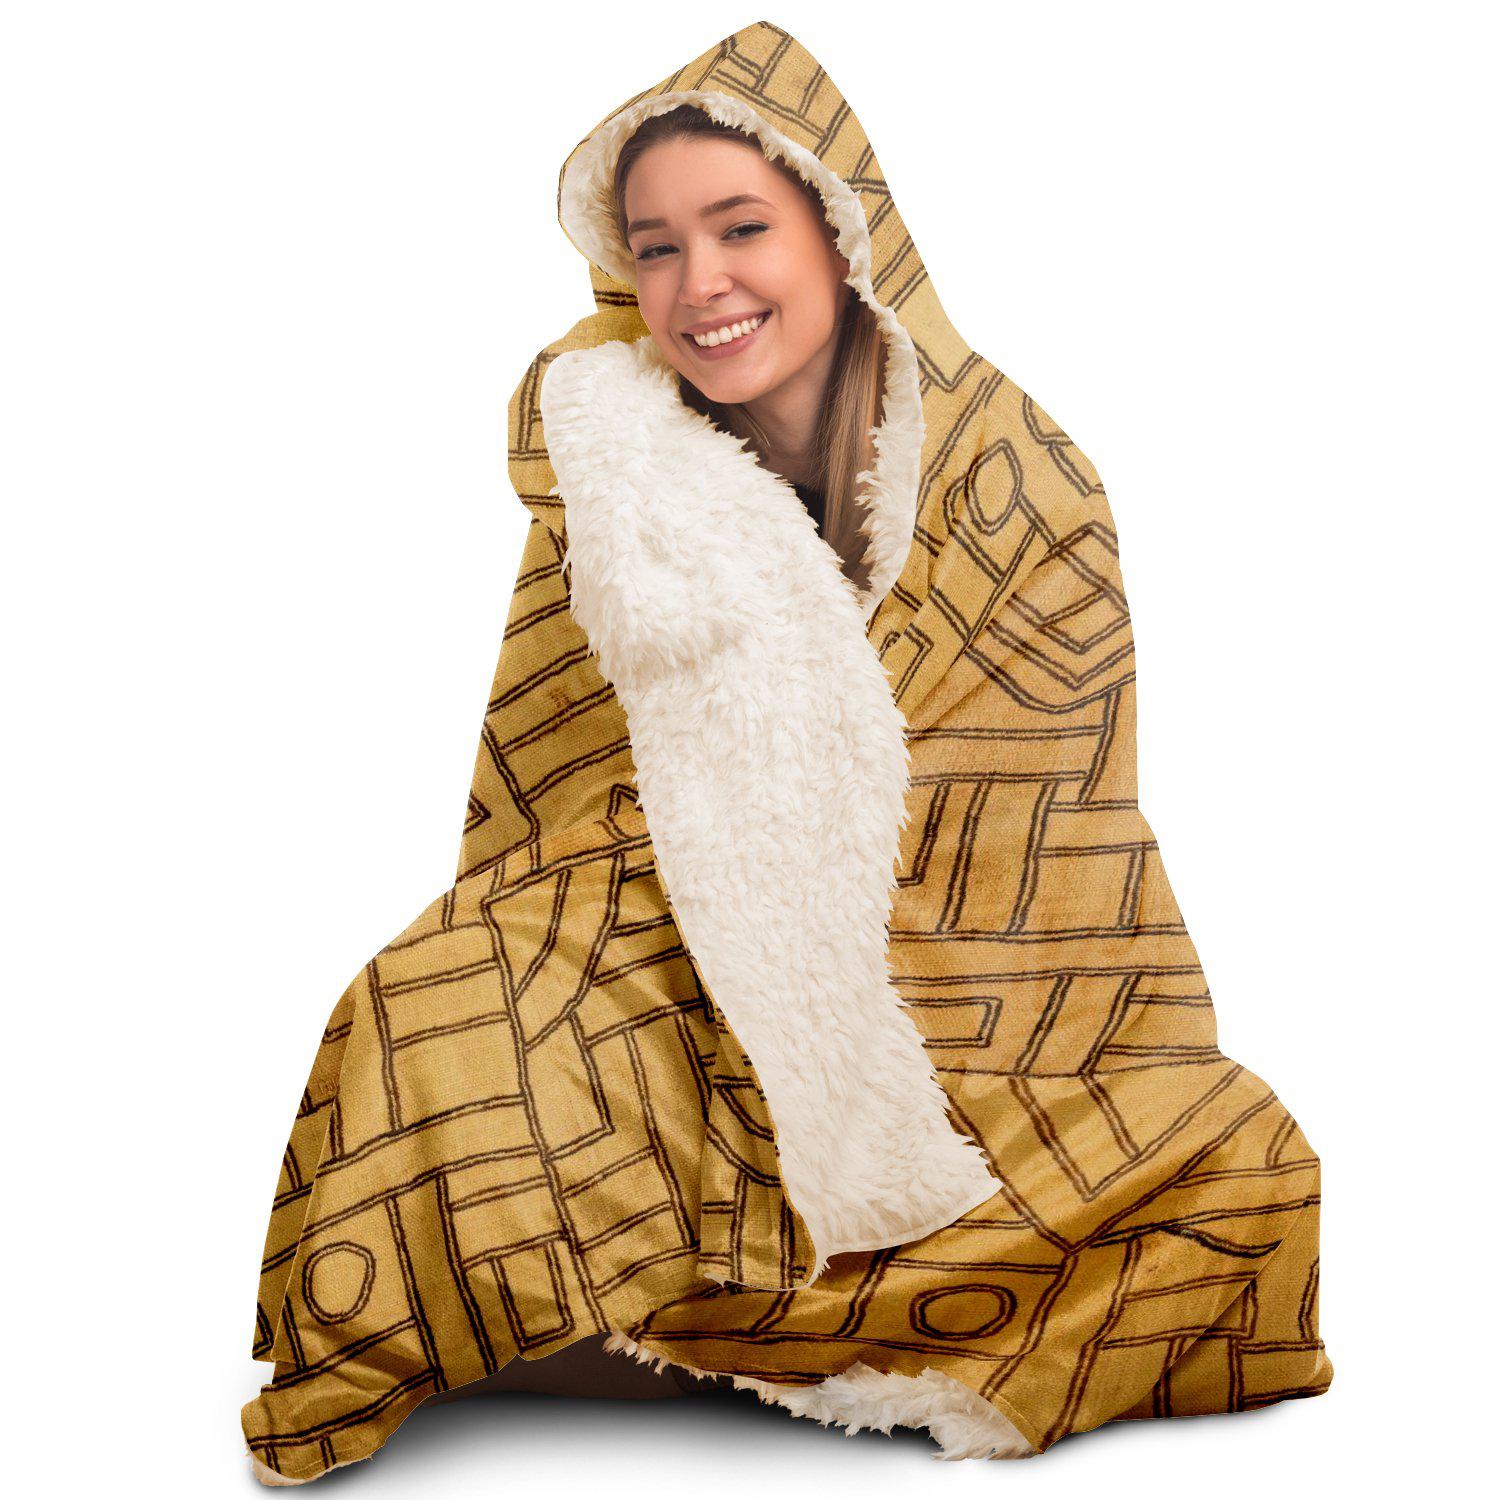 Hooded Blanket - AOP Hooded Blanket, (Mali) Traditional Kuba Cloth Design